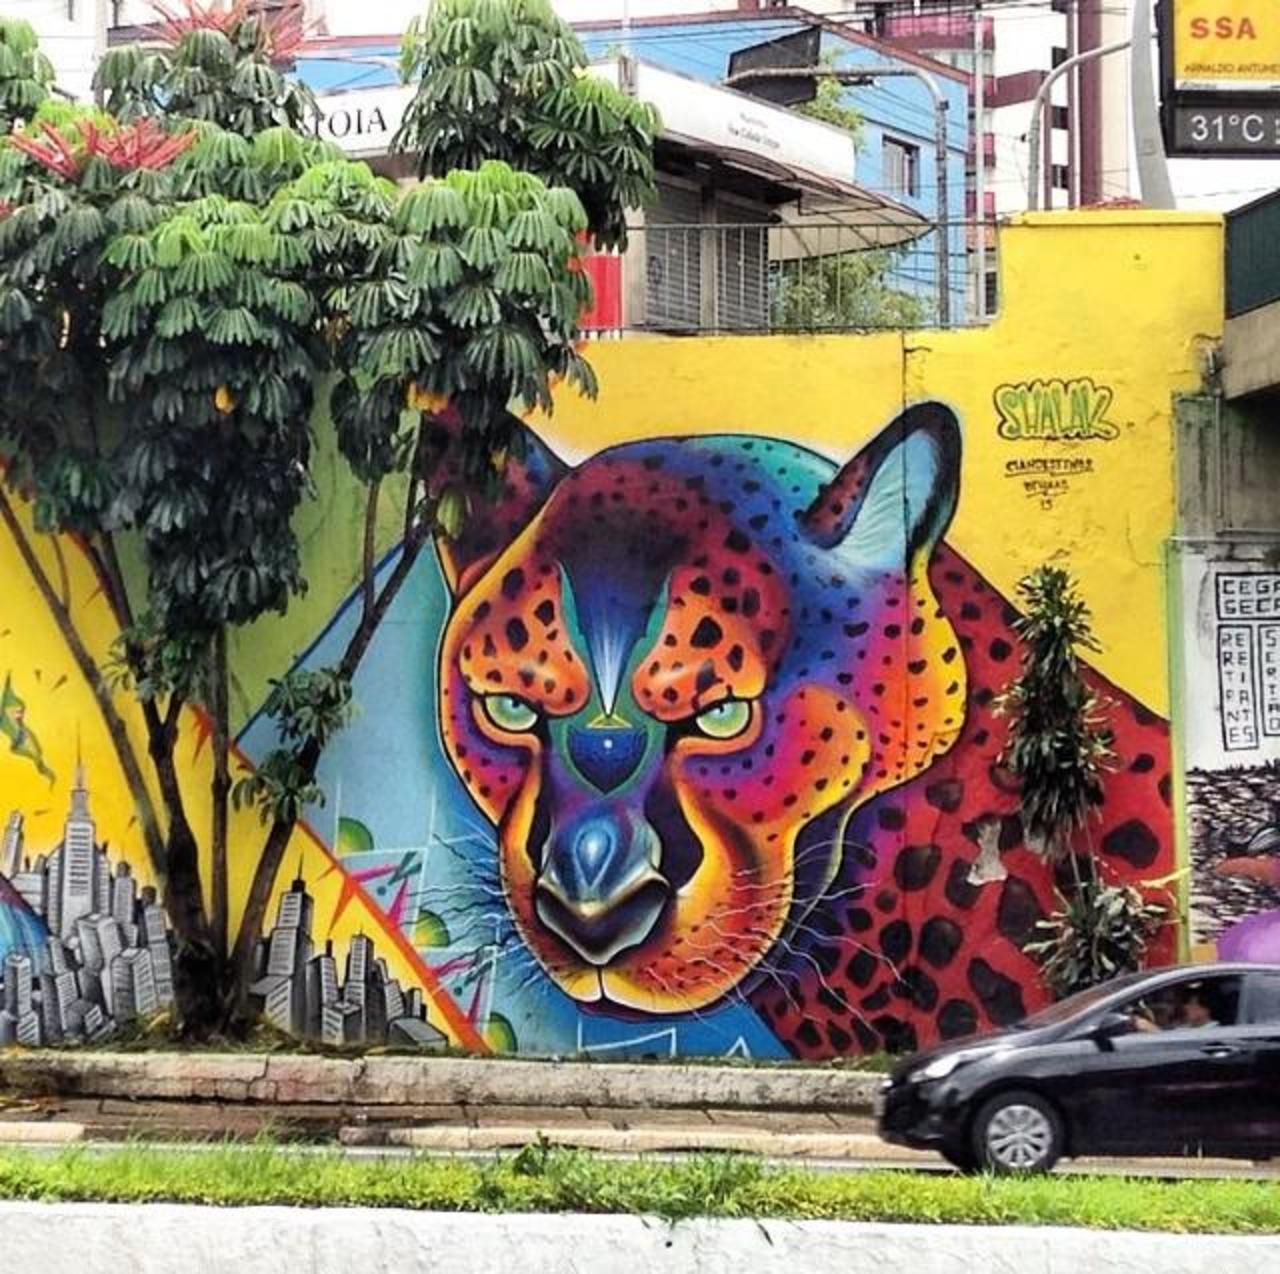 Artist ShalakAttack beautiful & colourful nature in Street Art piece in São Paulo 

#art #graffiti #mural #streetart http://t.co/5rZHvhyPXU